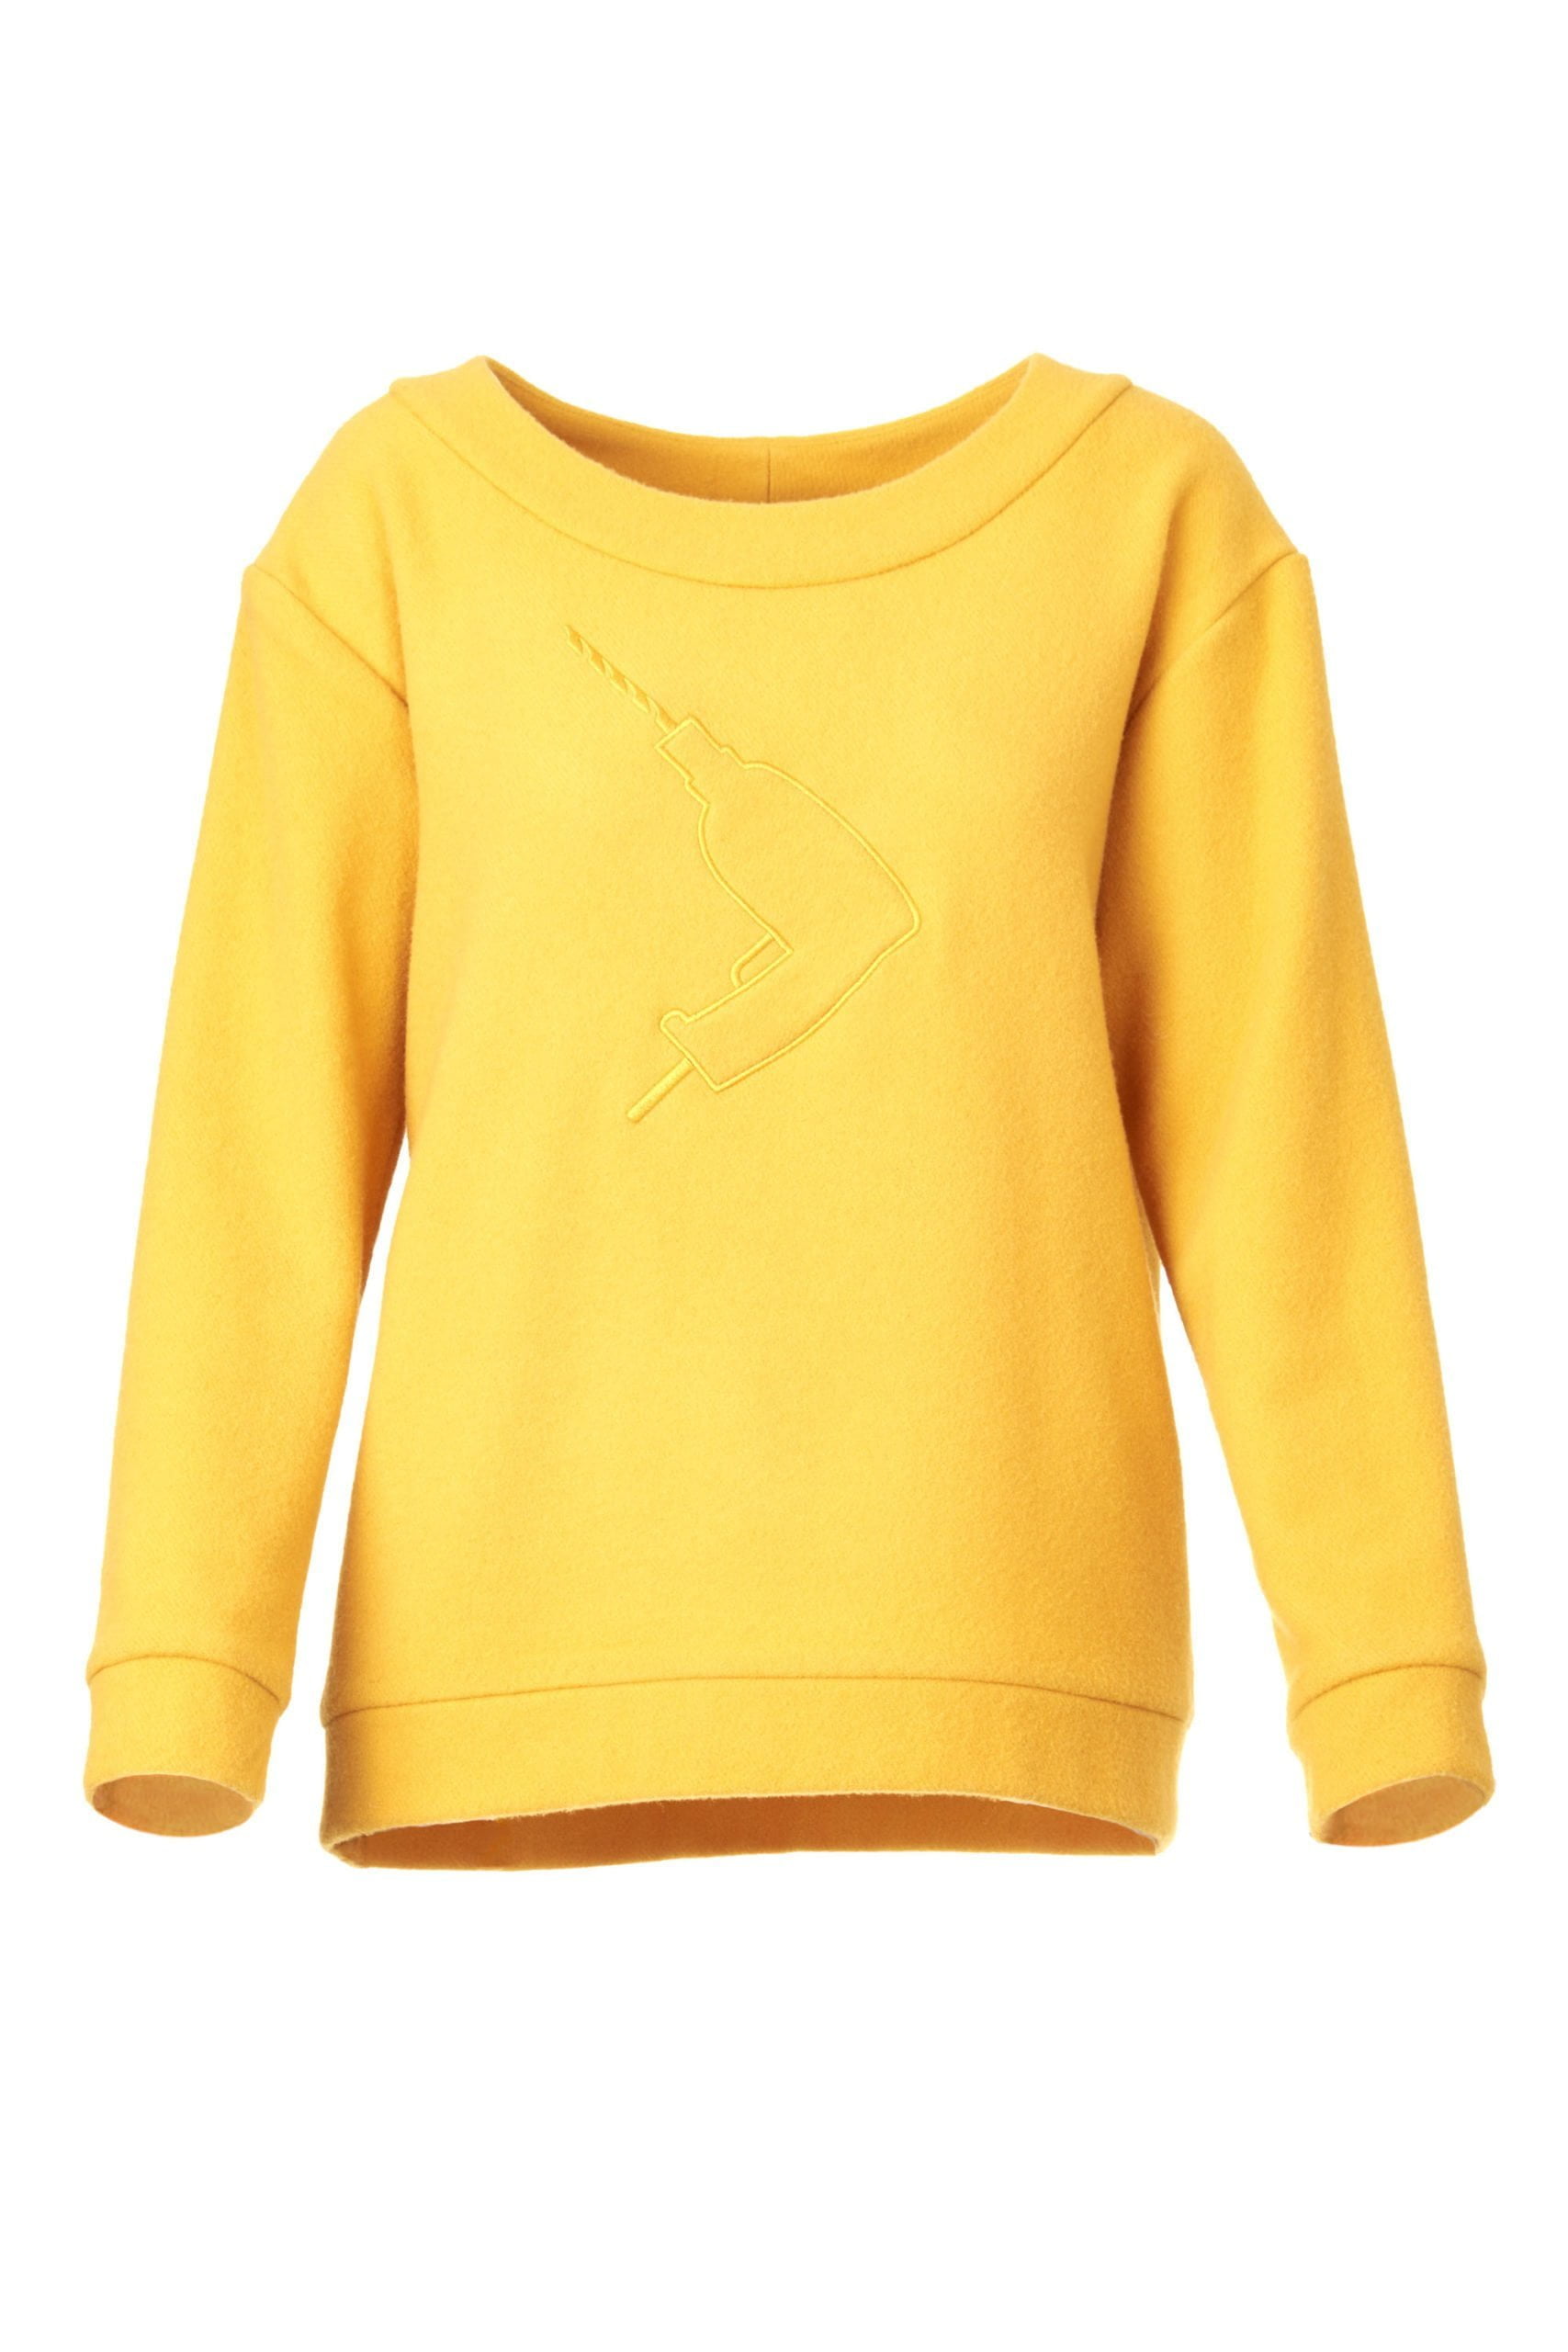 Acephala Yellow Pullover Wool